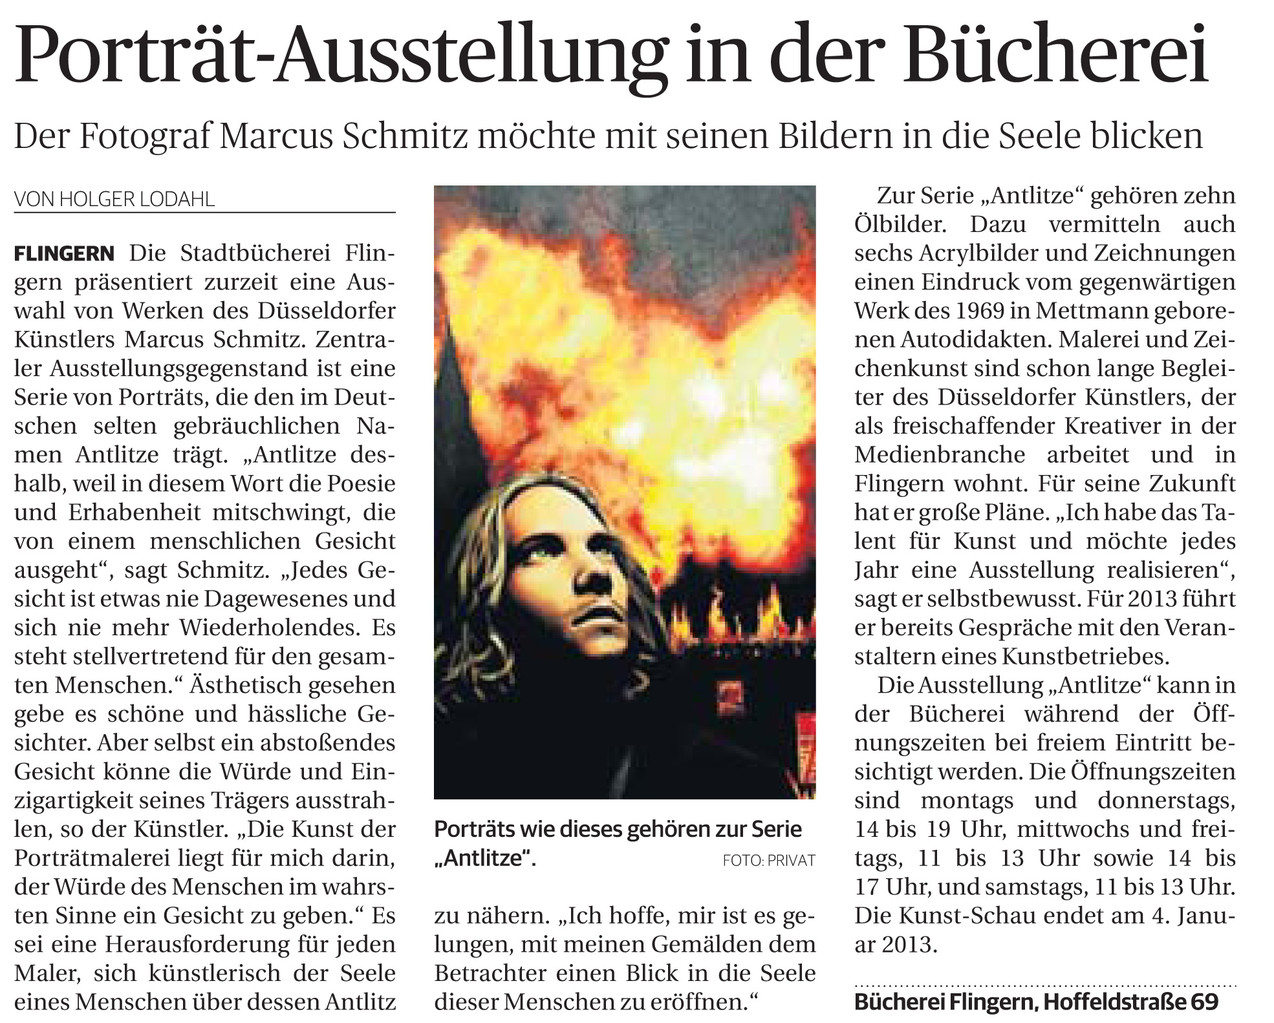 © Rheinische Post, Holger Lodahl, 23.11.2012